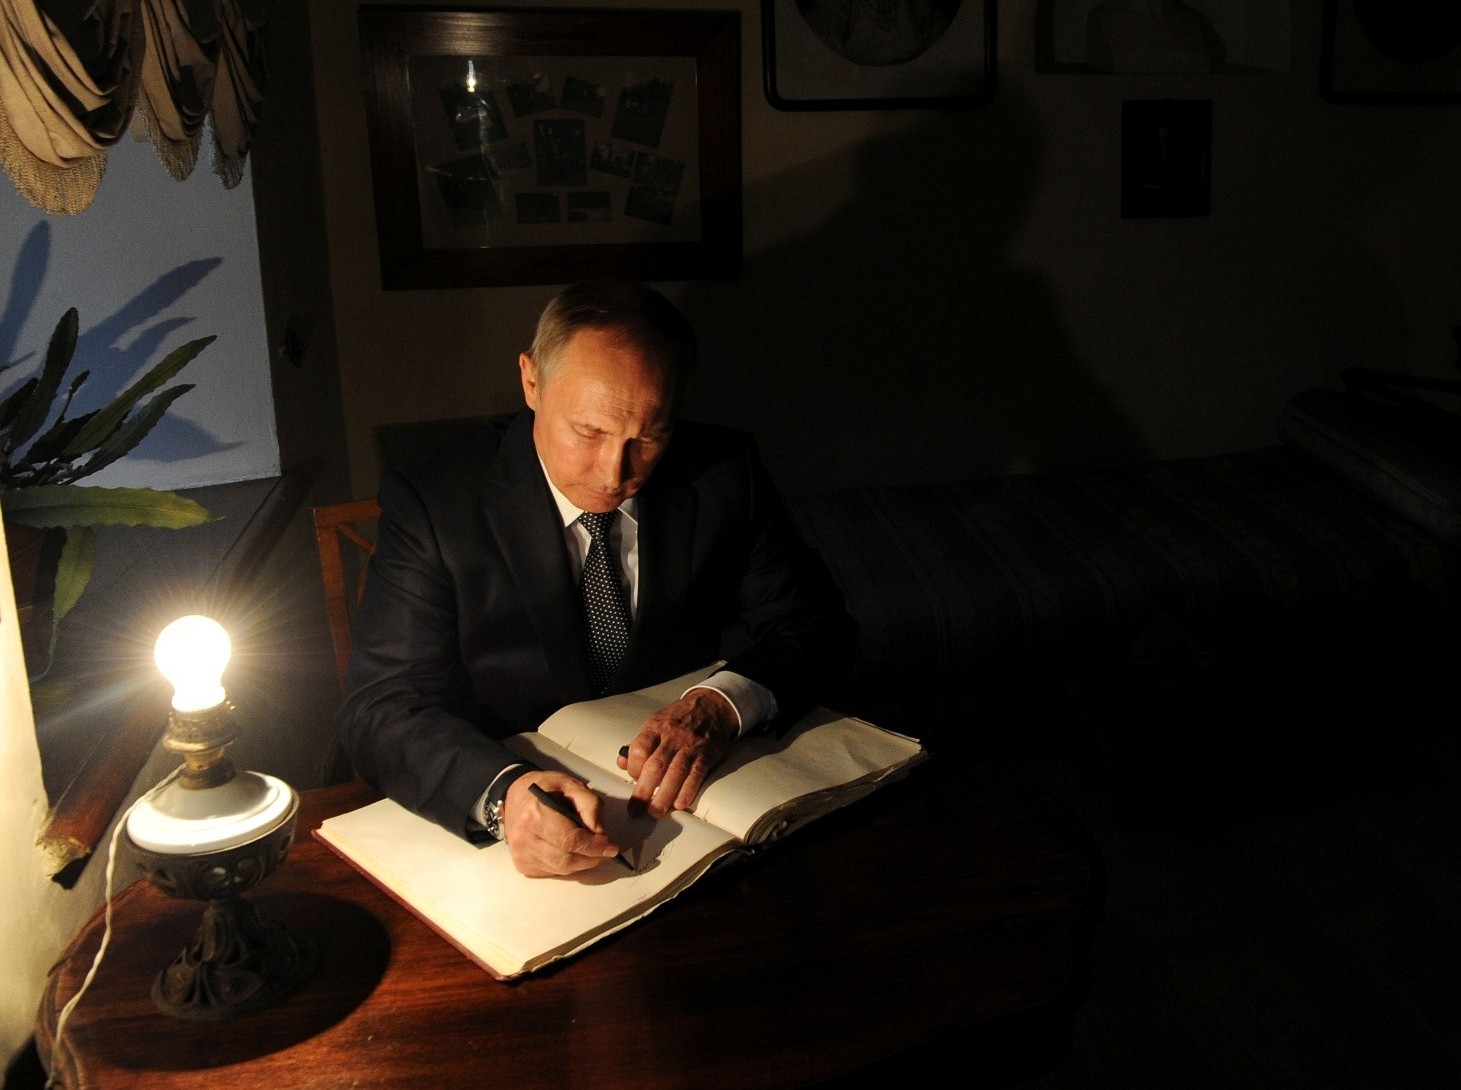 Putin writing